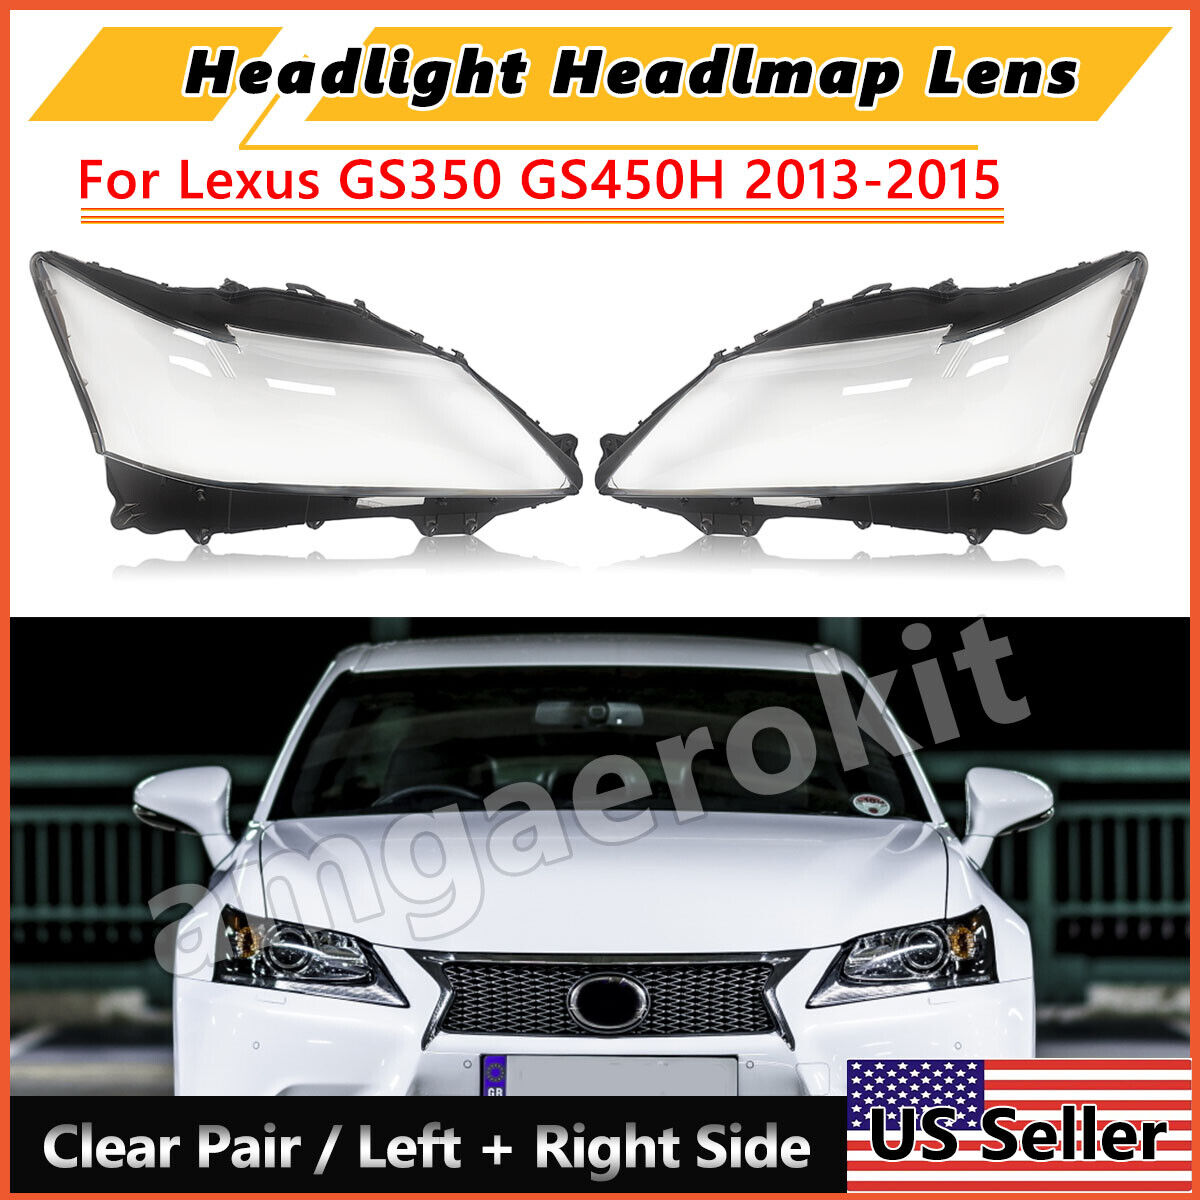 NEW For Lexus GS350 GS450H 2013-2015 Left Right Headlight Lens Headlamp Cover US